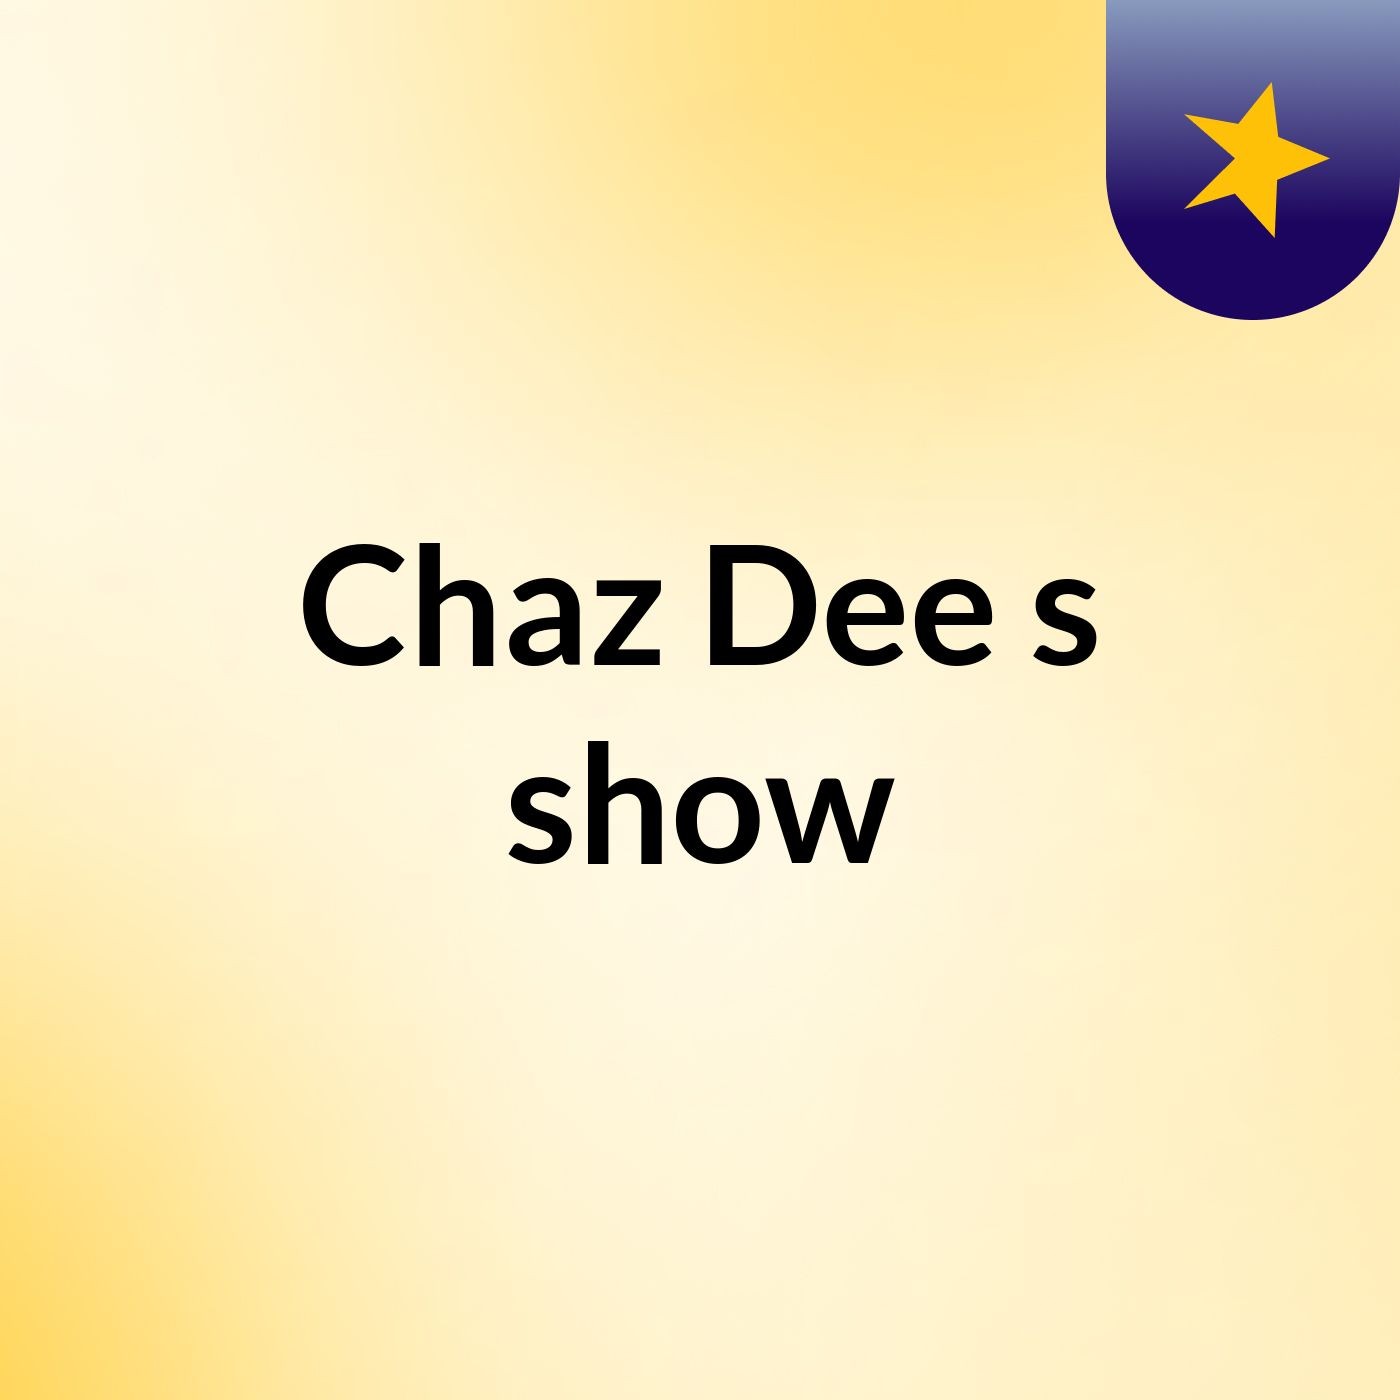 Chaz Dee's show